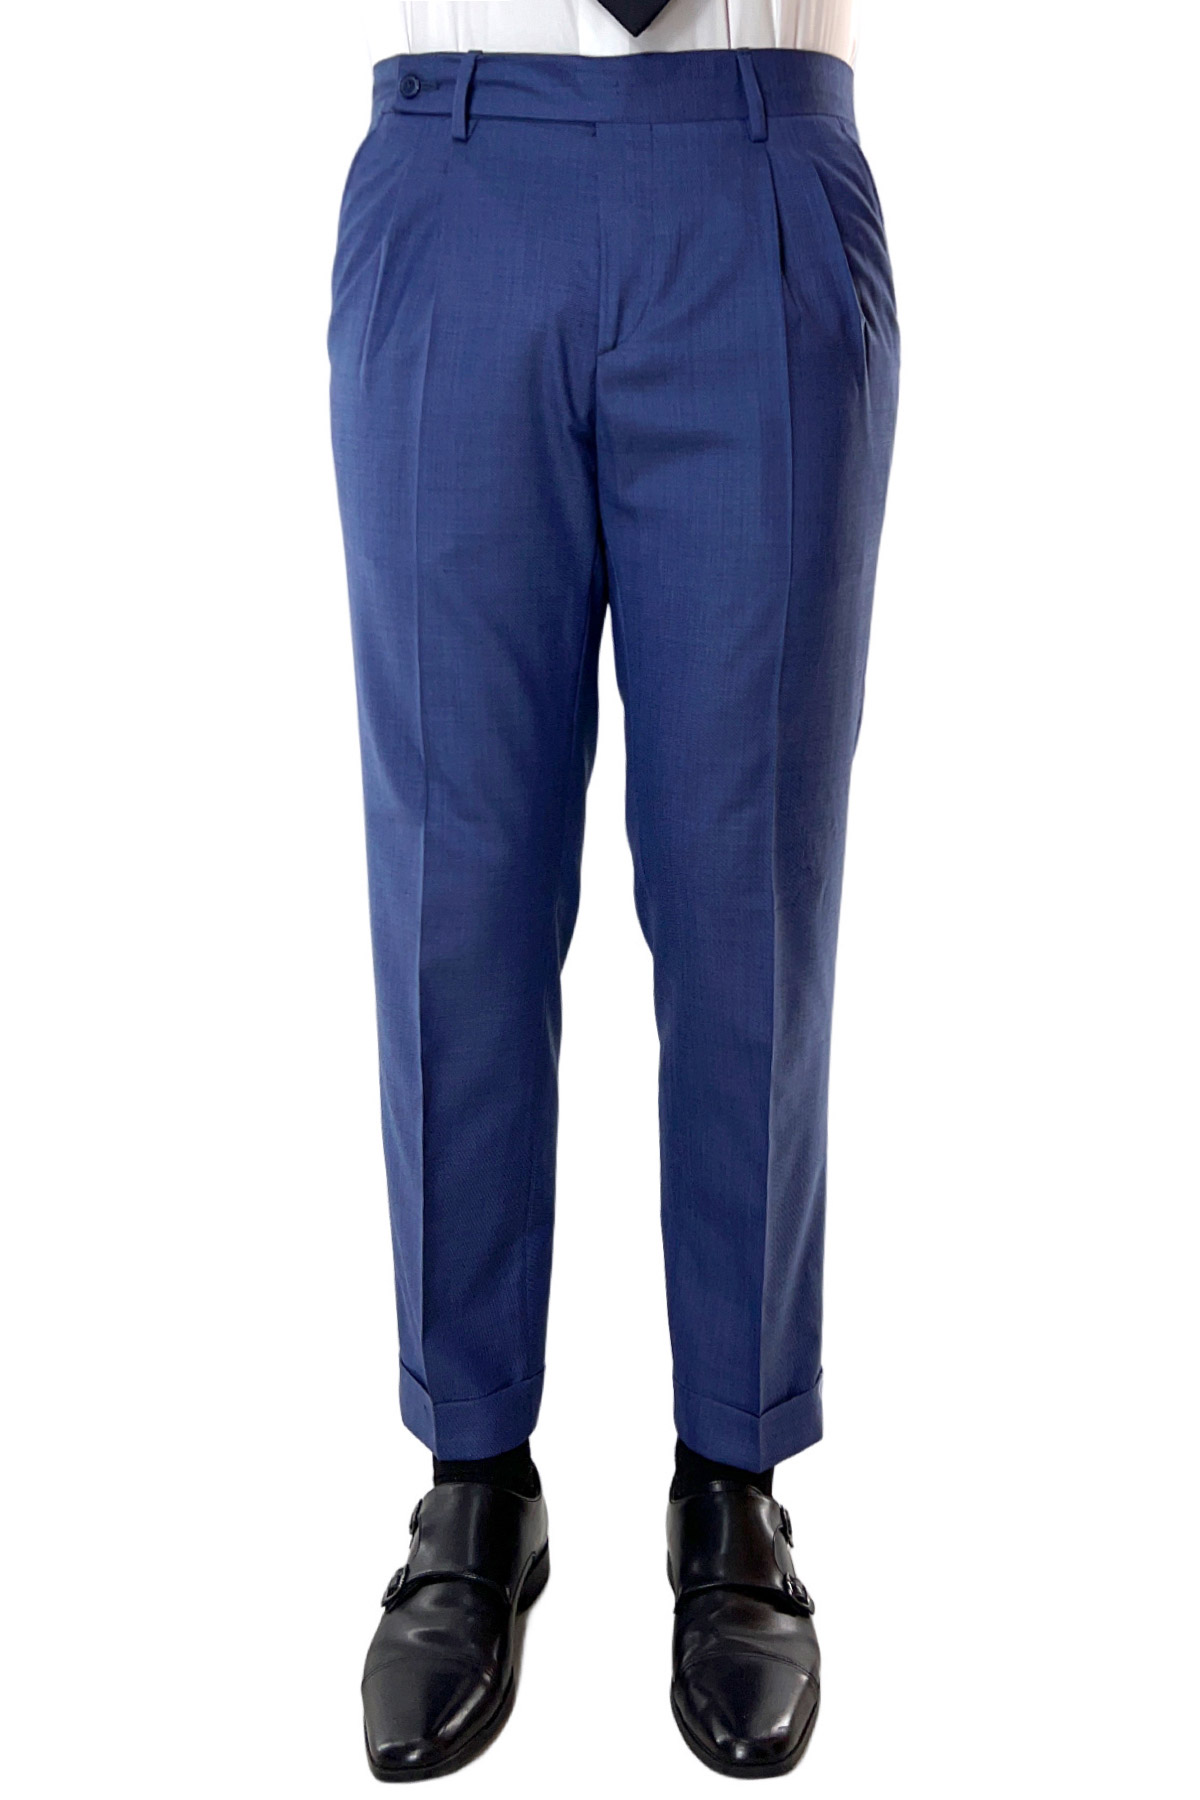 Pantalone uomo color denim chiusura prolungata doppia pinces in fresco lana super 140's Holland & Sherry